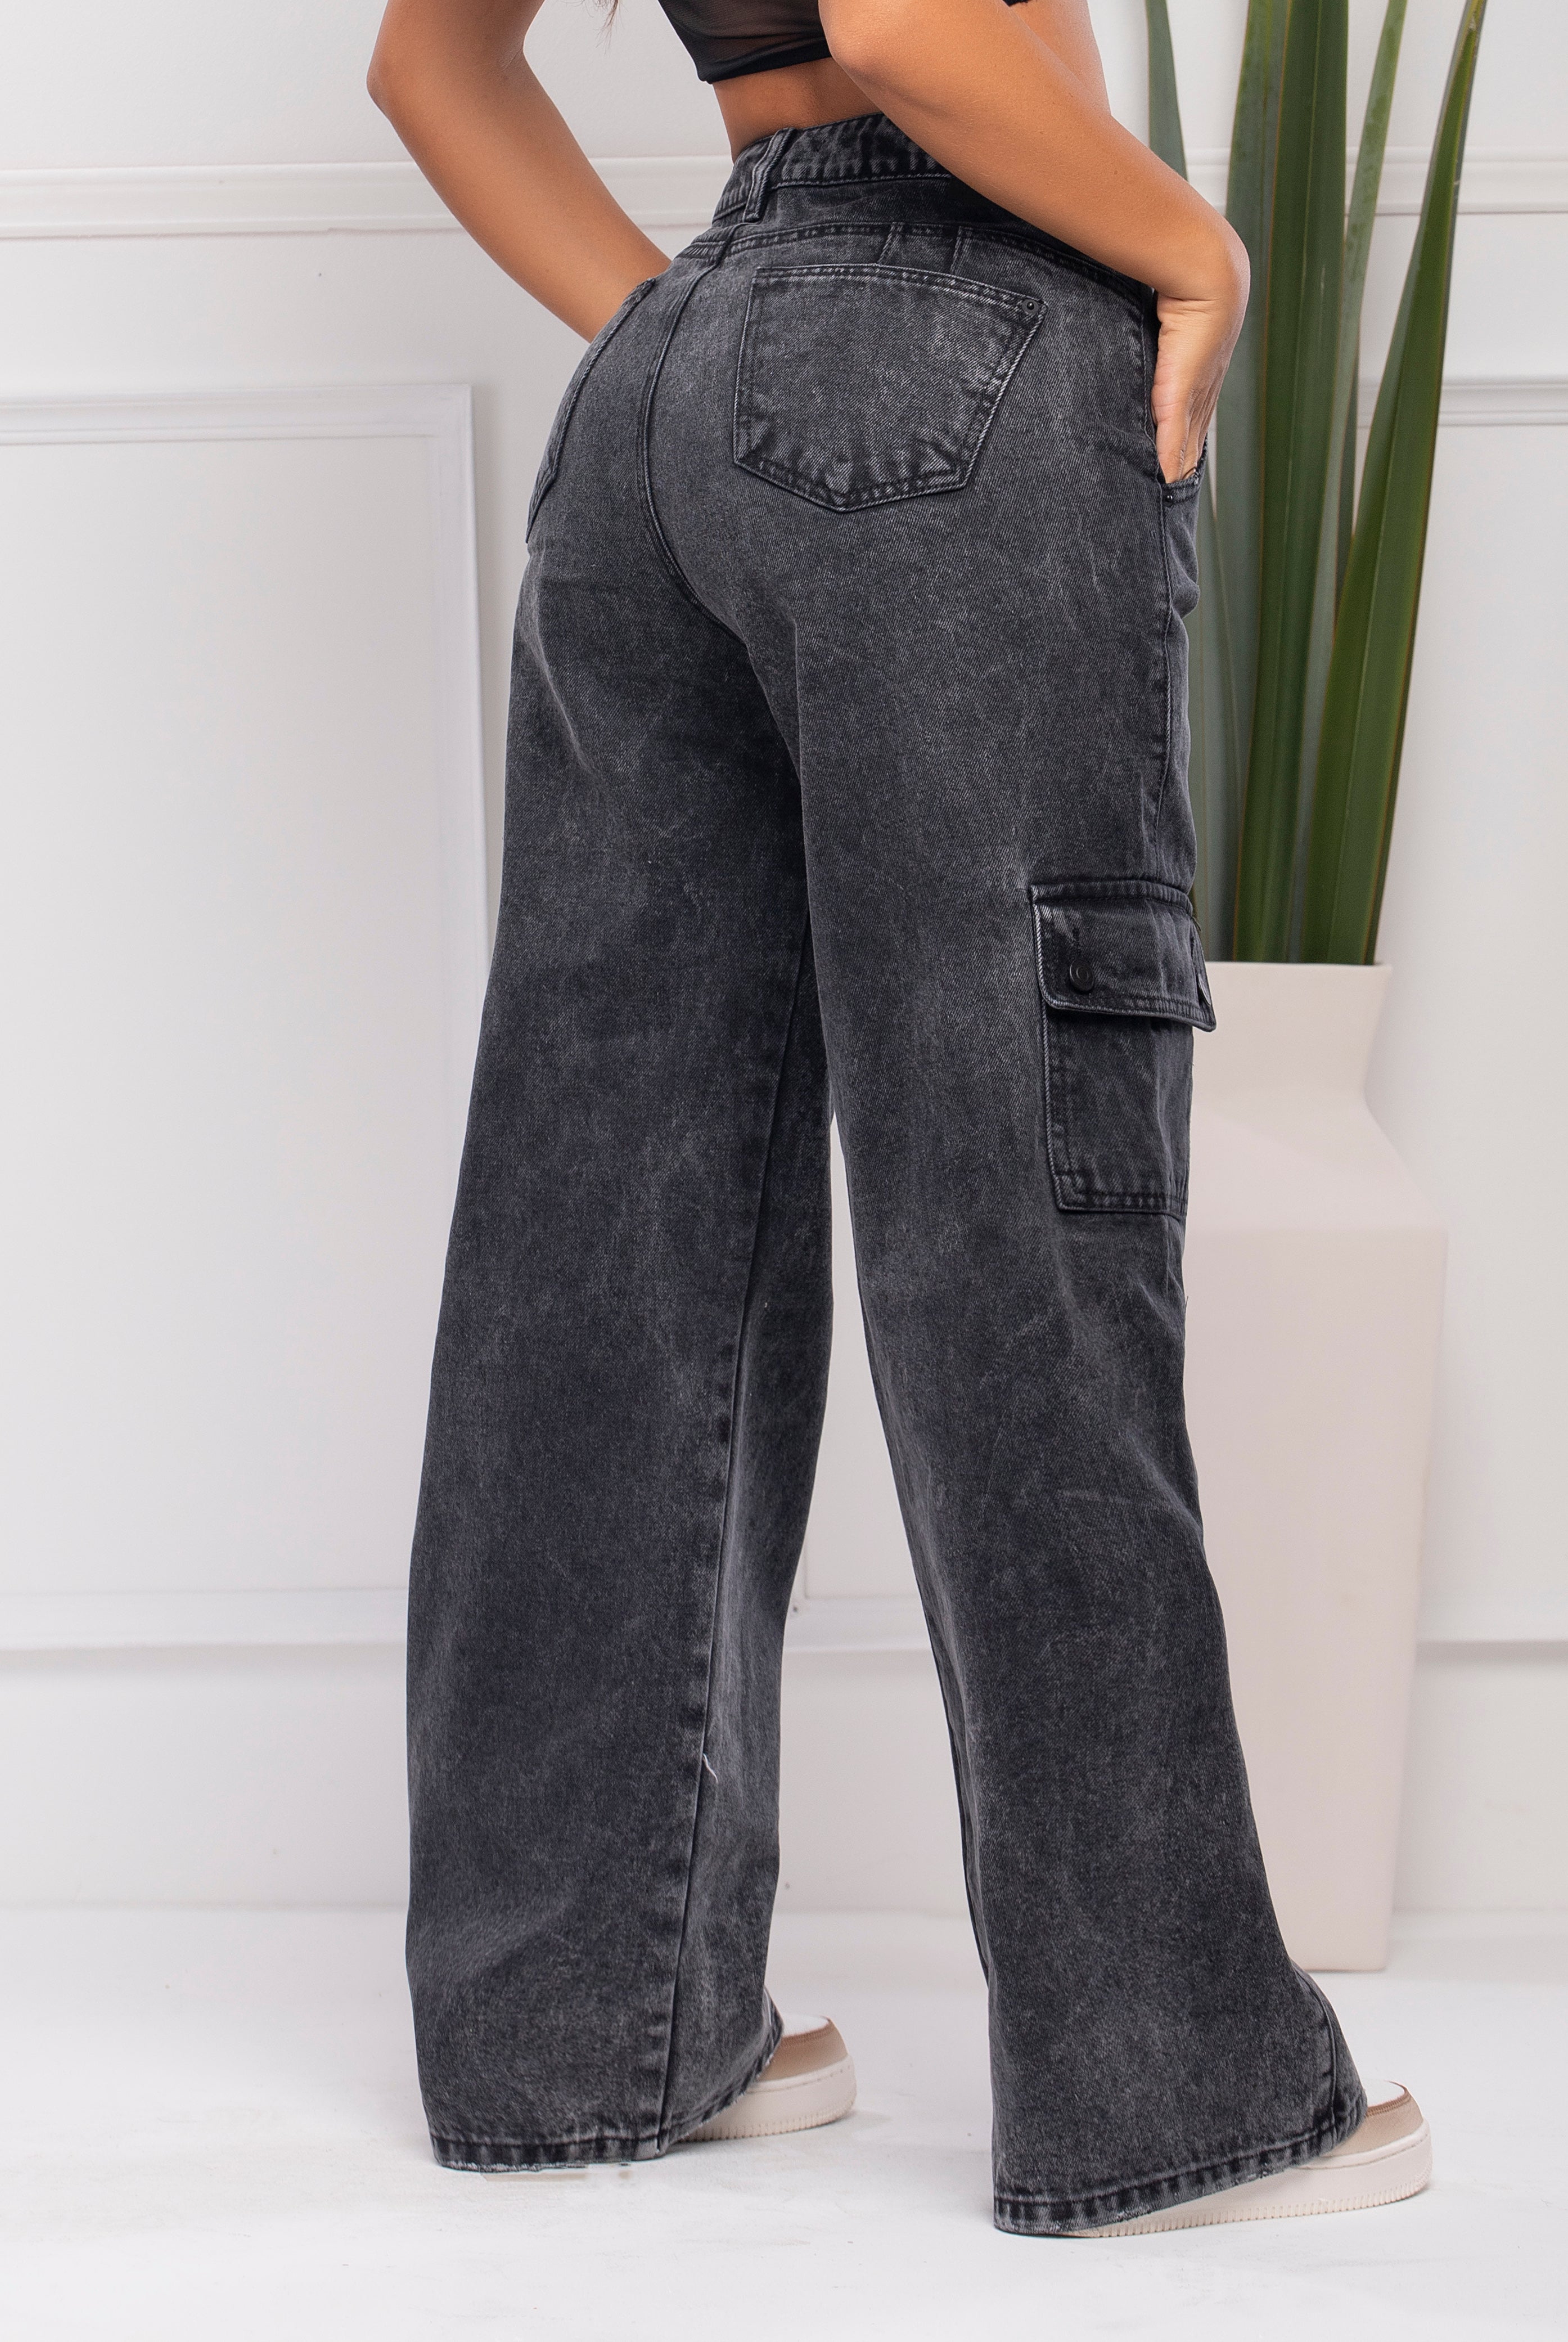 Buy women's jeans online | Fashionable jeans | NA-KD